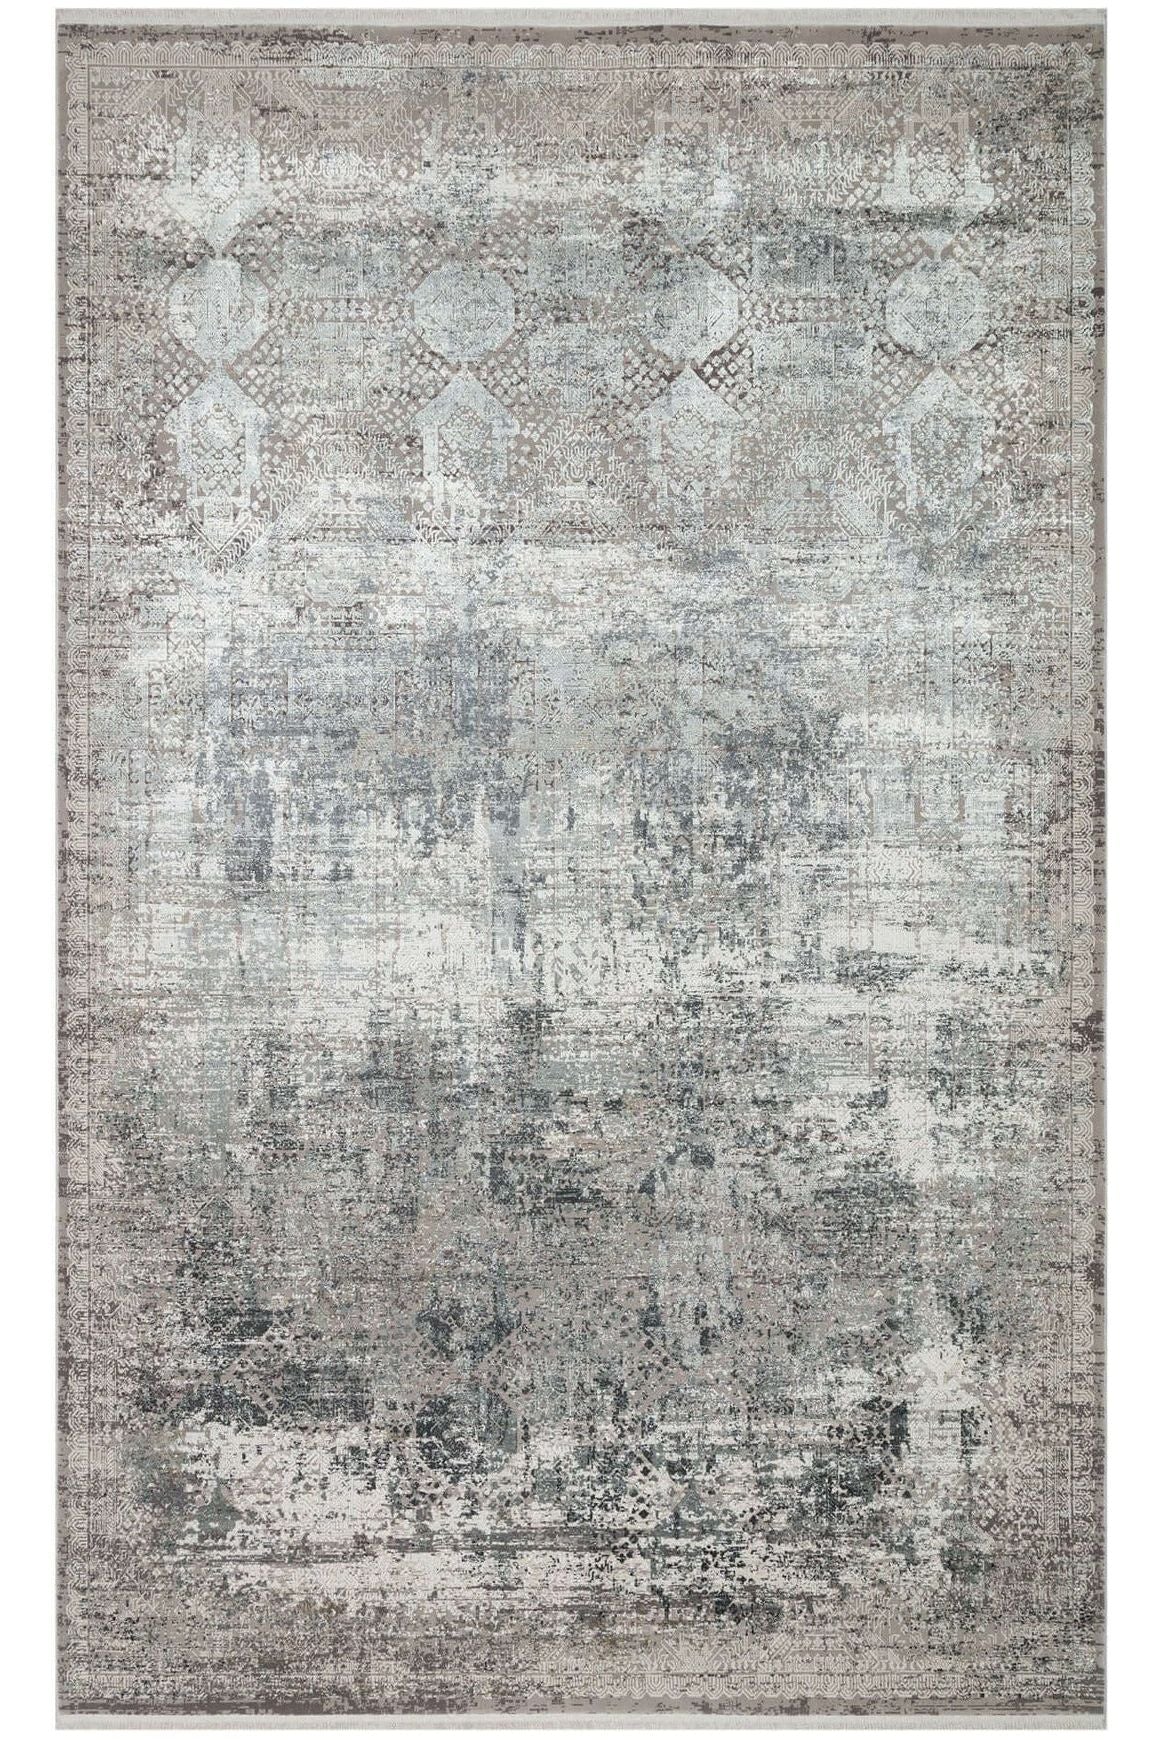 #Turkish_Carpets_Rugs# #Modern_Carpets# #Abrash_Carpets#Fs 14 Cream Grey Xw